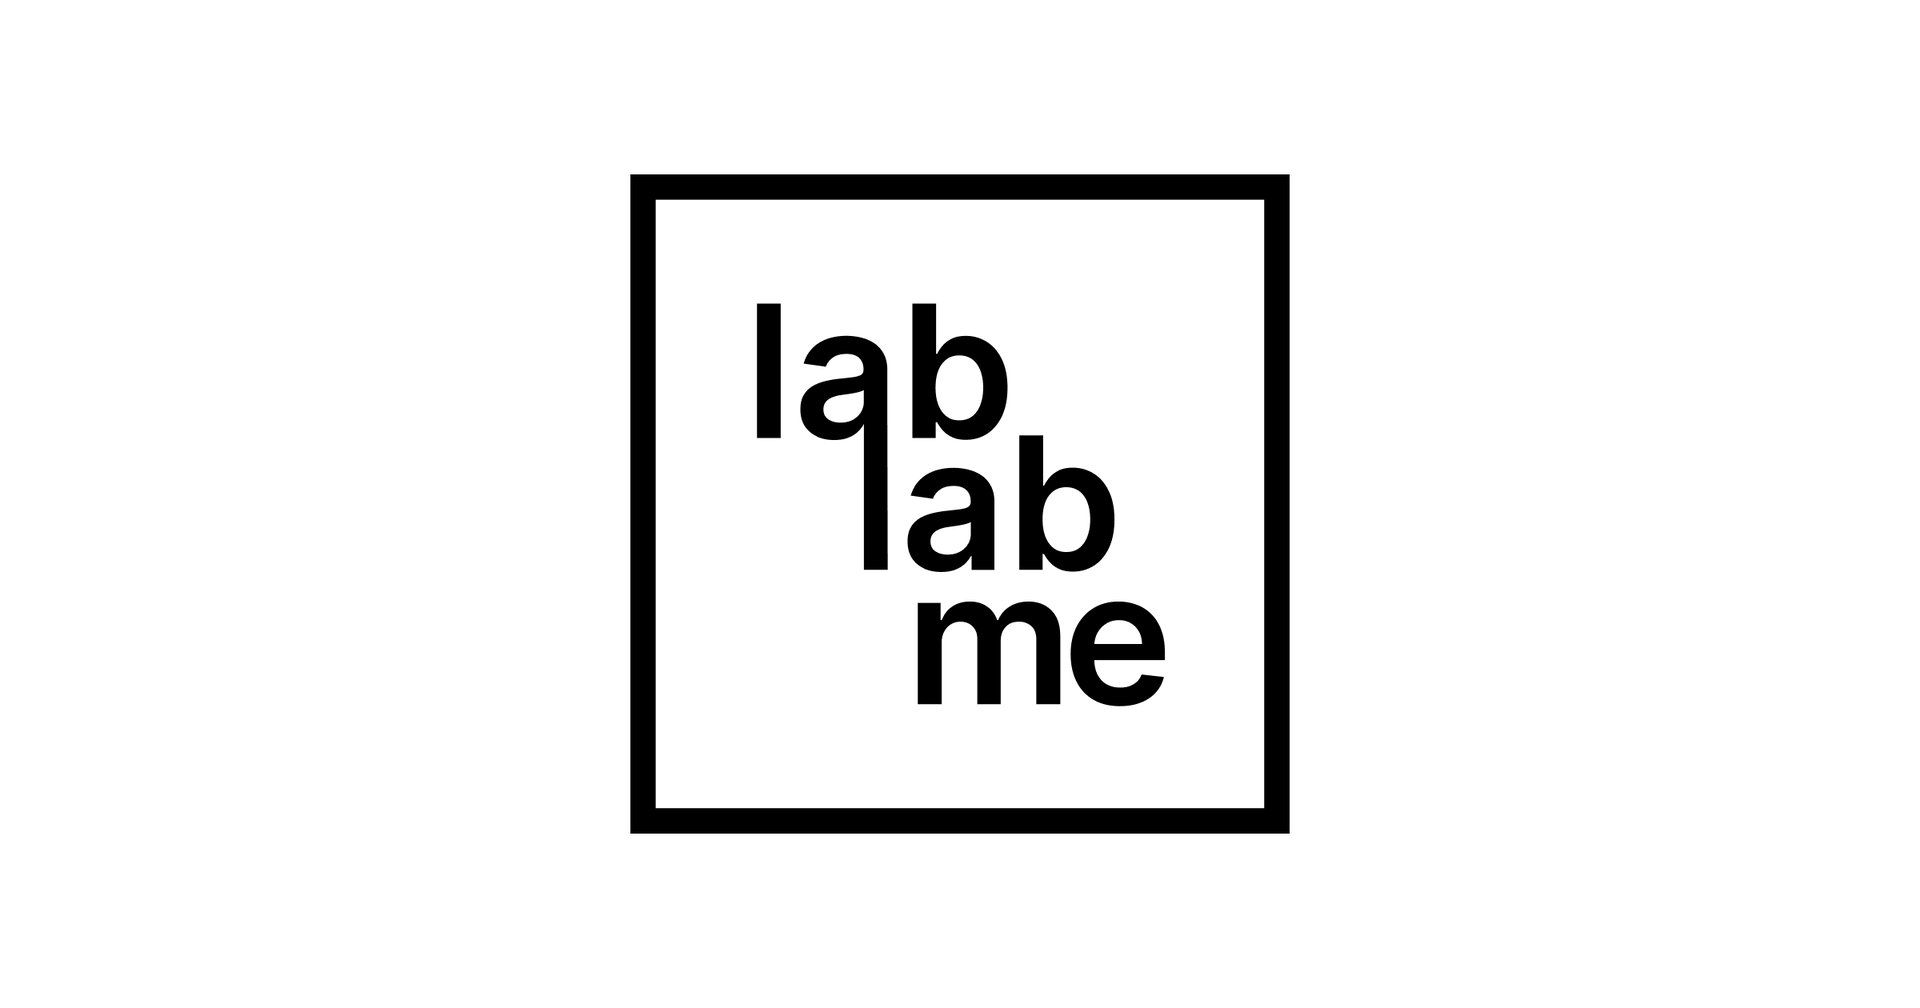 About Lablab.ai